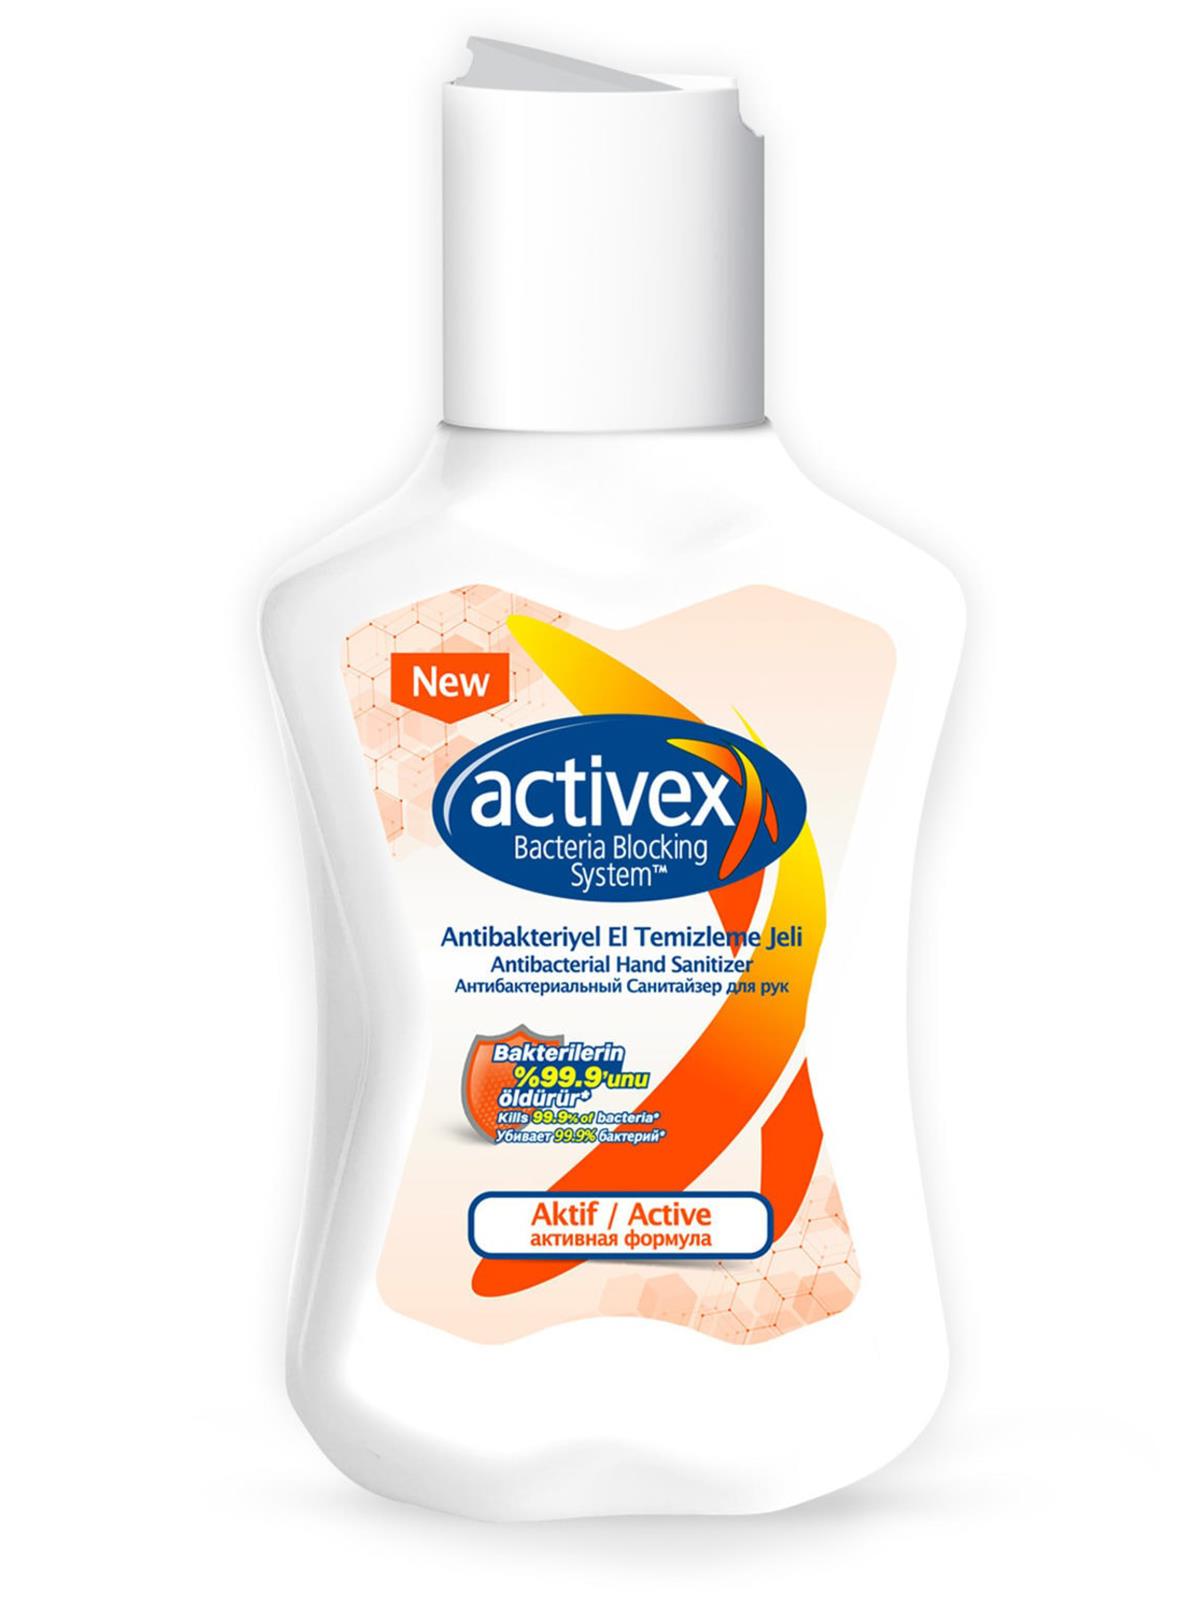 Activex Antibak El Temizleme Jeli Aktif 100 ml